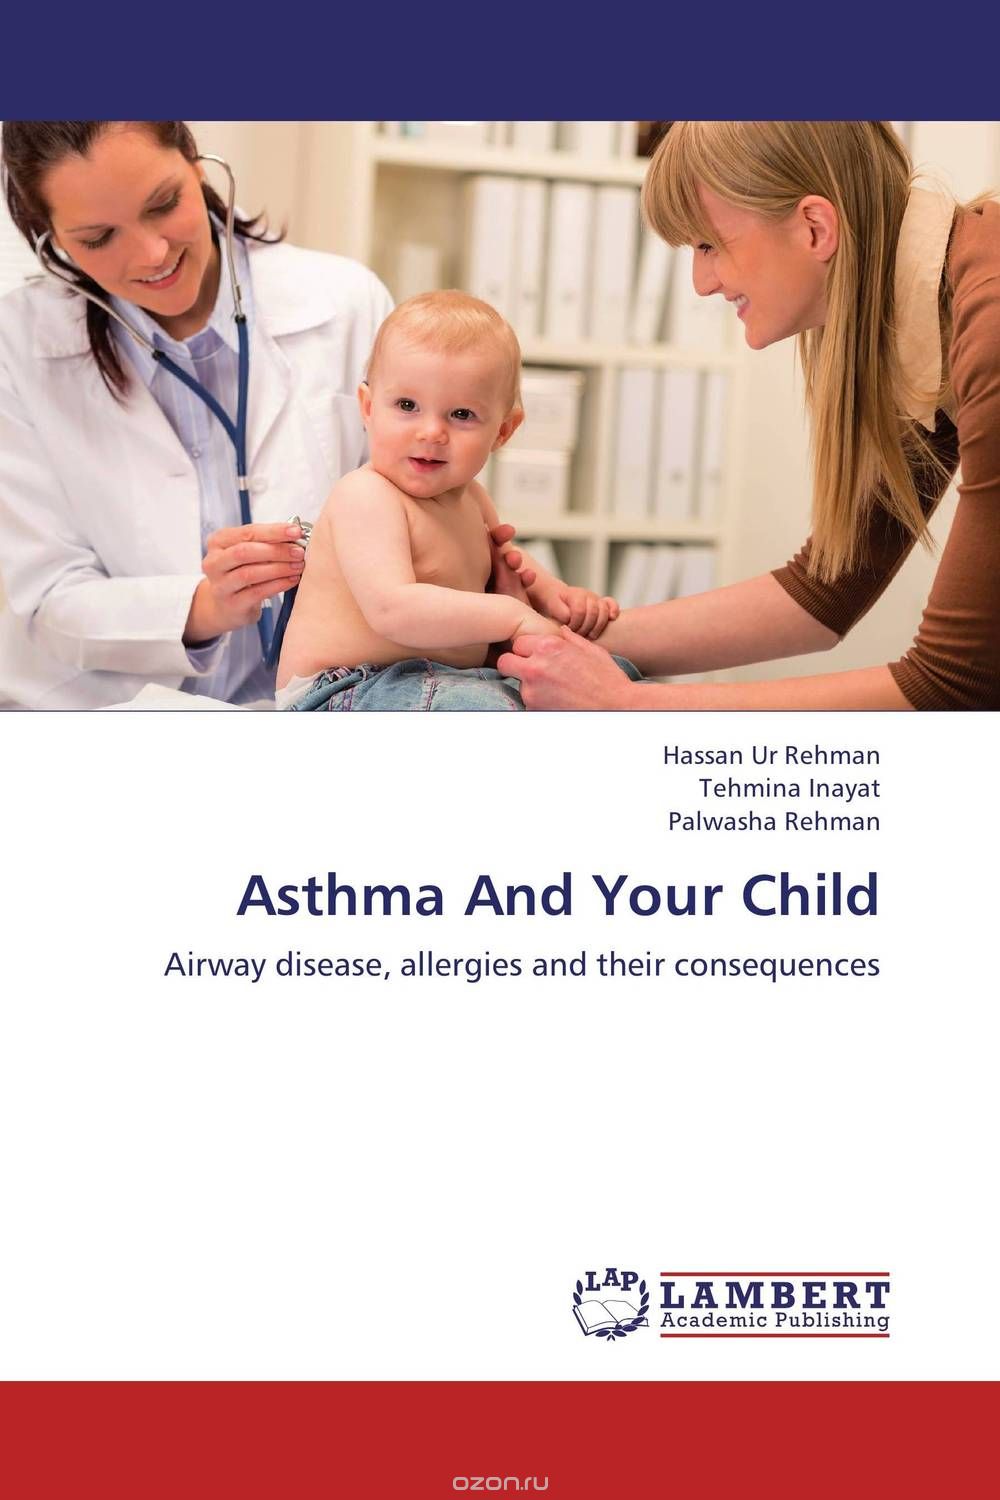 Скачать книгу "Asthma And Your Child"